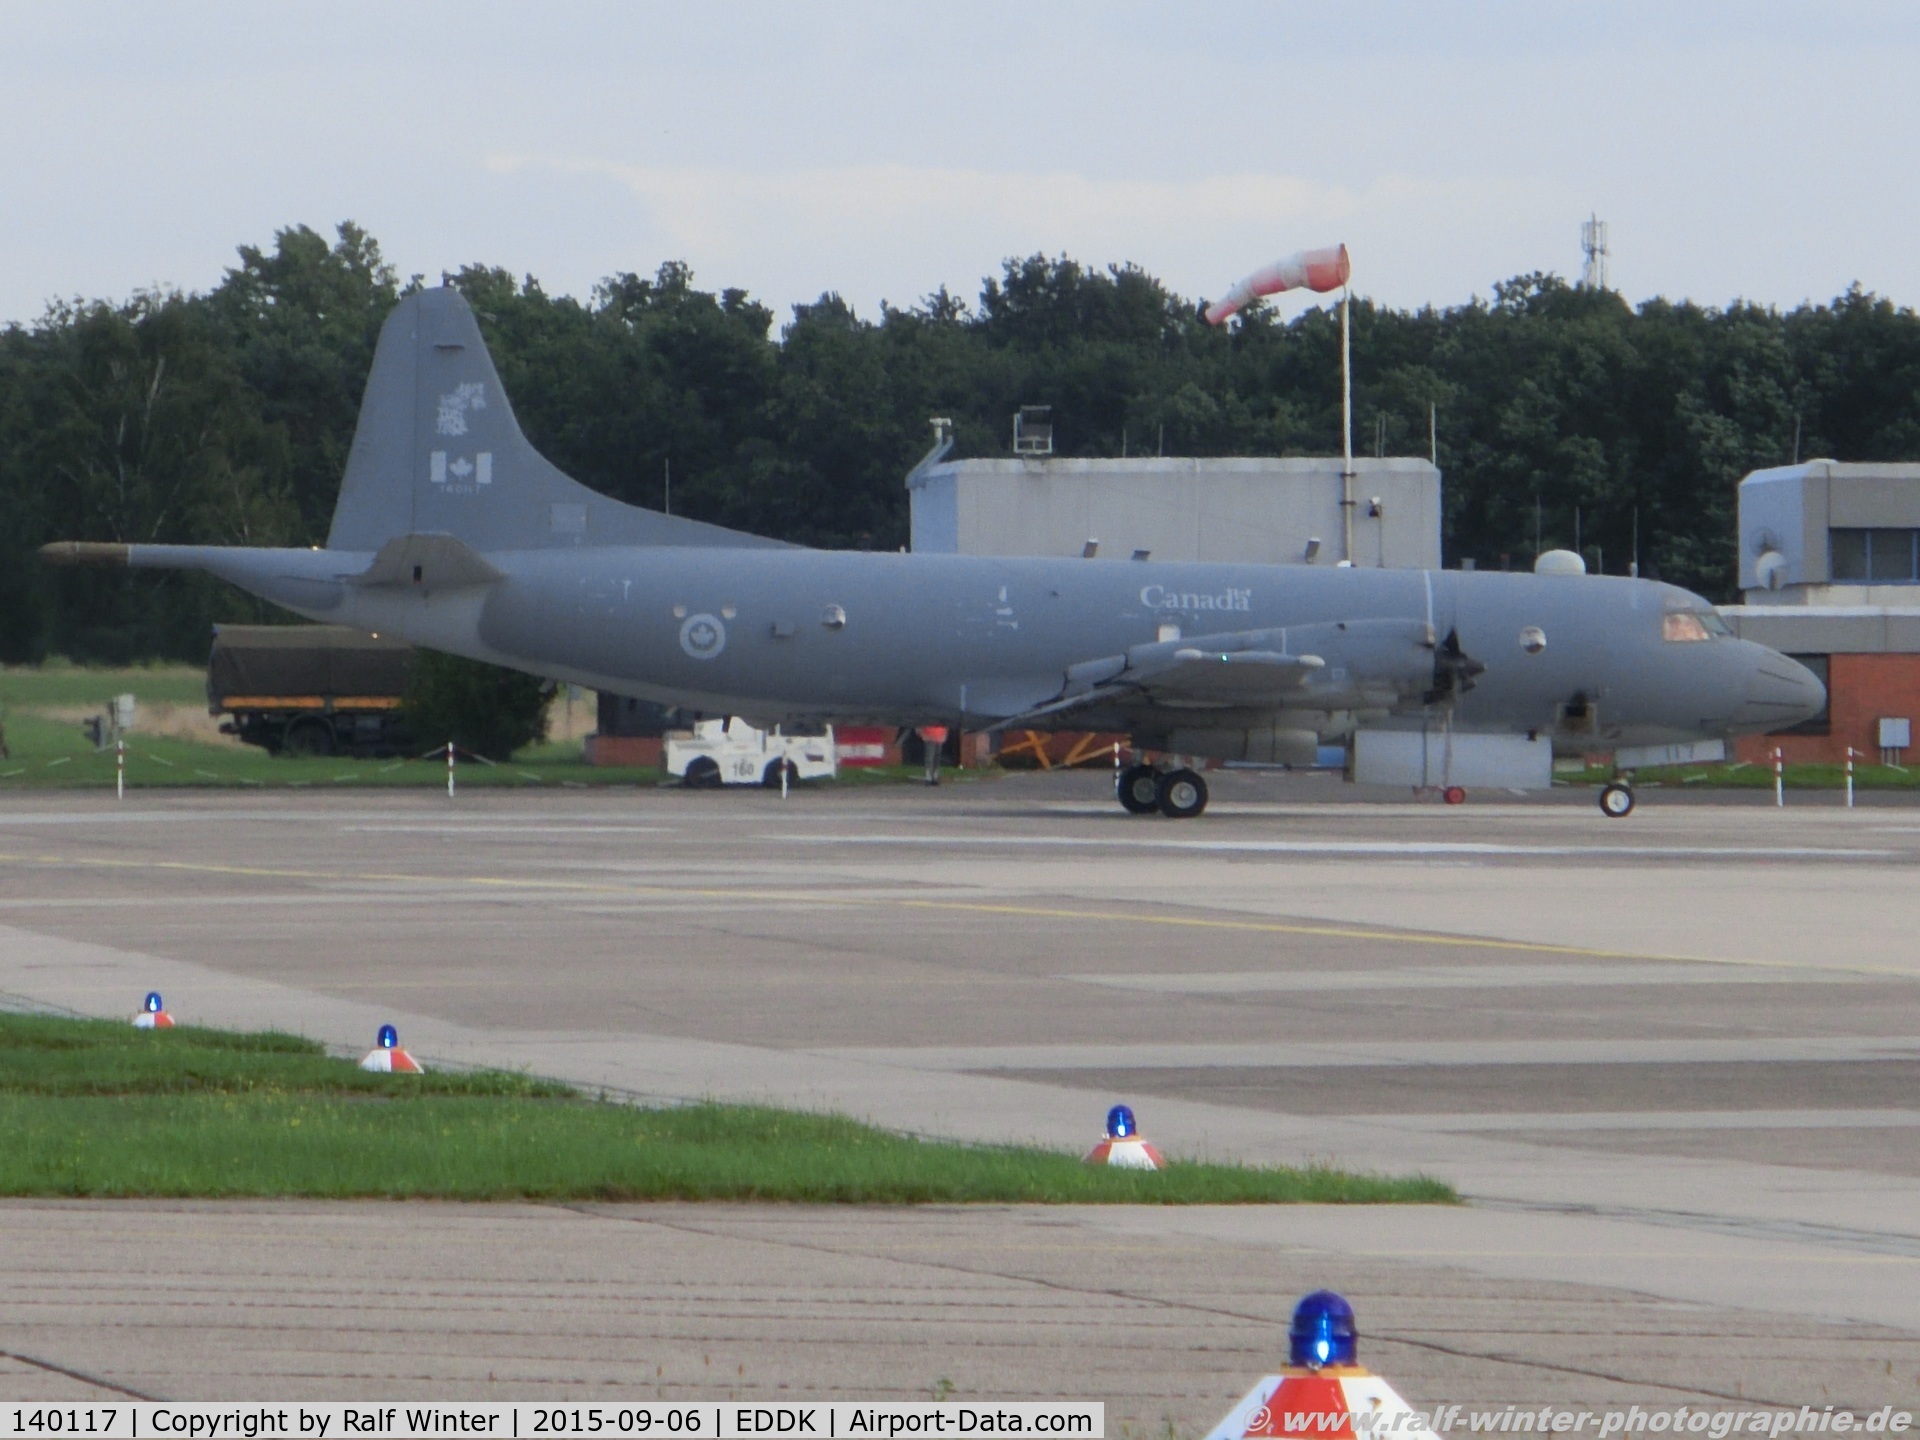 140117, 1981 Lockheed CP-140 Aurora C/N 285B-5723, Lockheed CP-140 Aurora - CFC Canadian Forces - 5723 - 140117 - 06.09.2015 - CGN